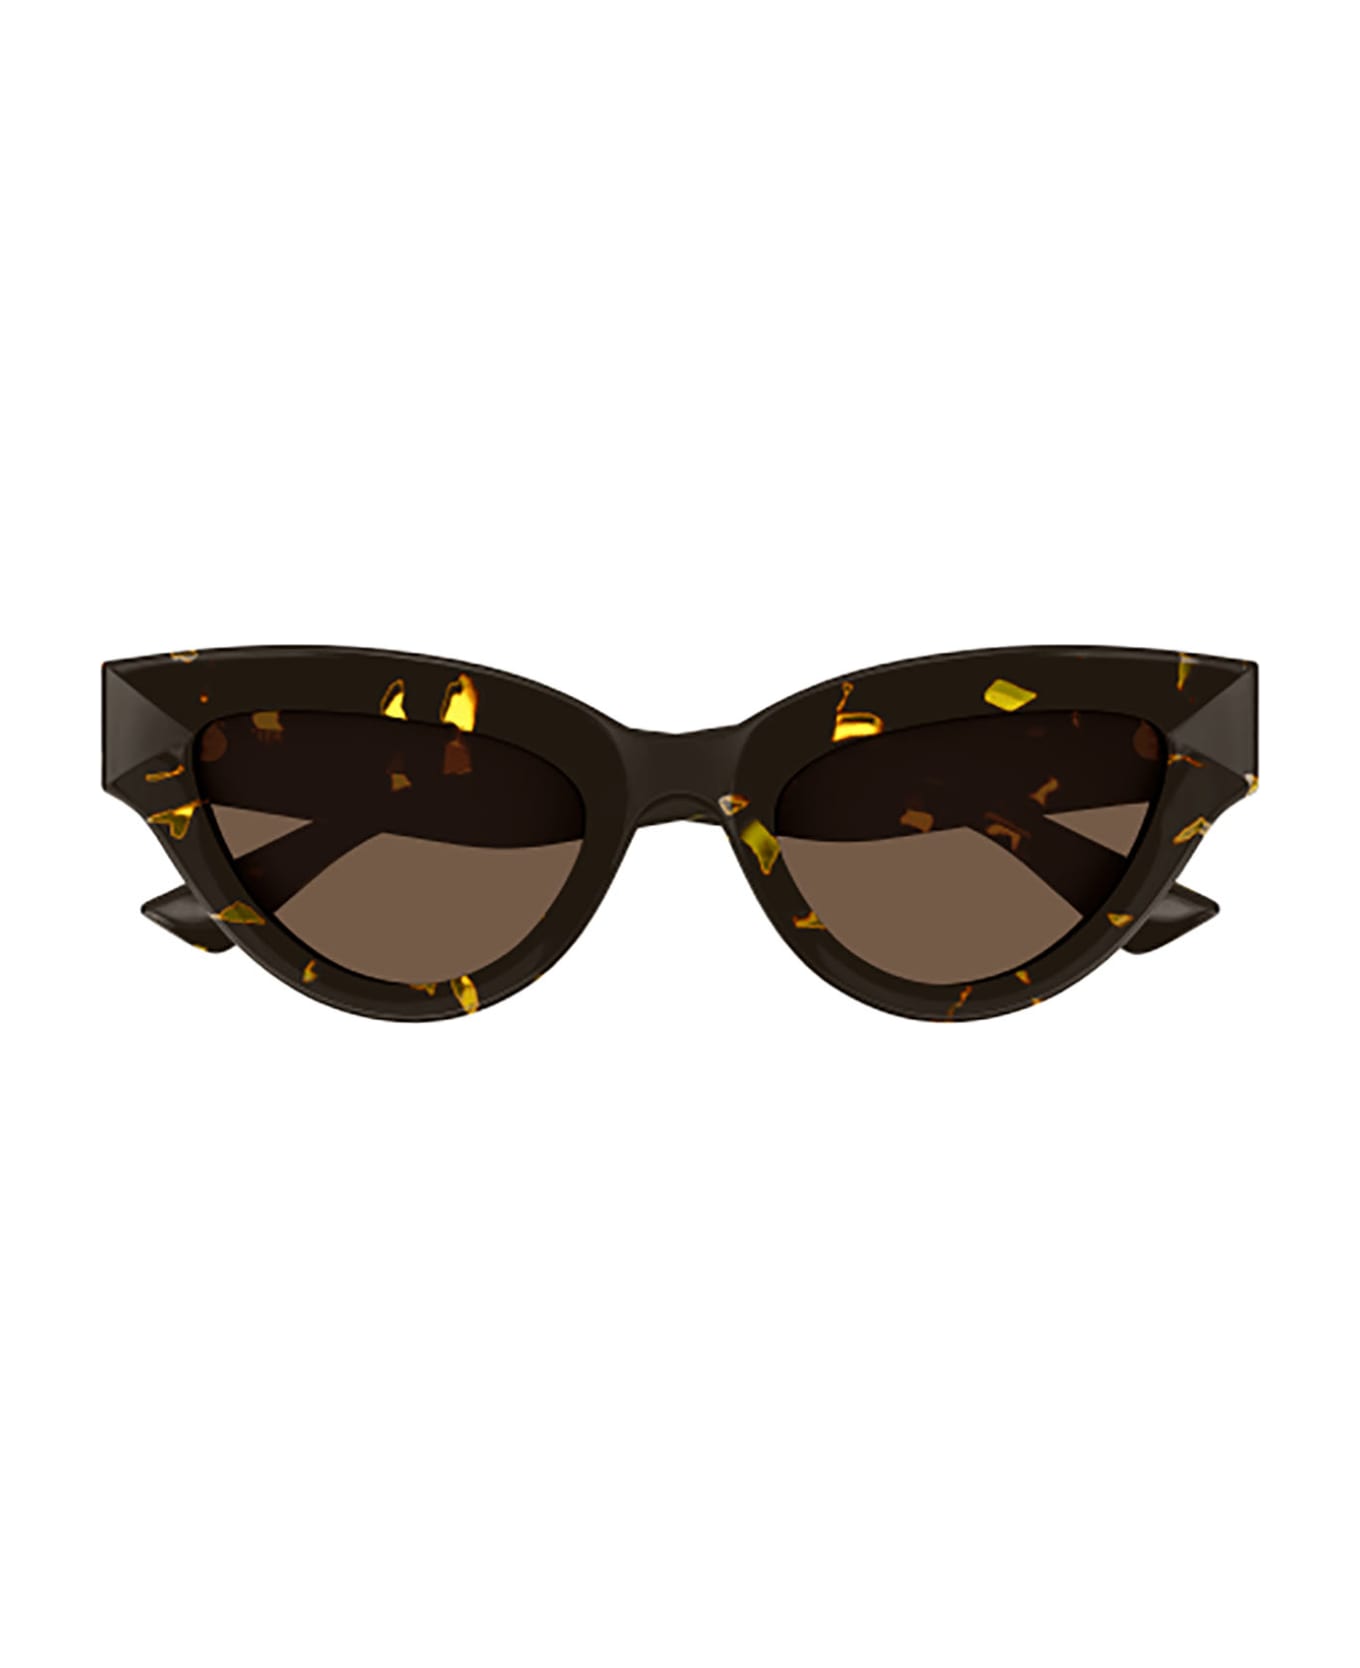 Bottega Veneta Eyewear Bv1249s Sunglasses - 002 havana havana brown